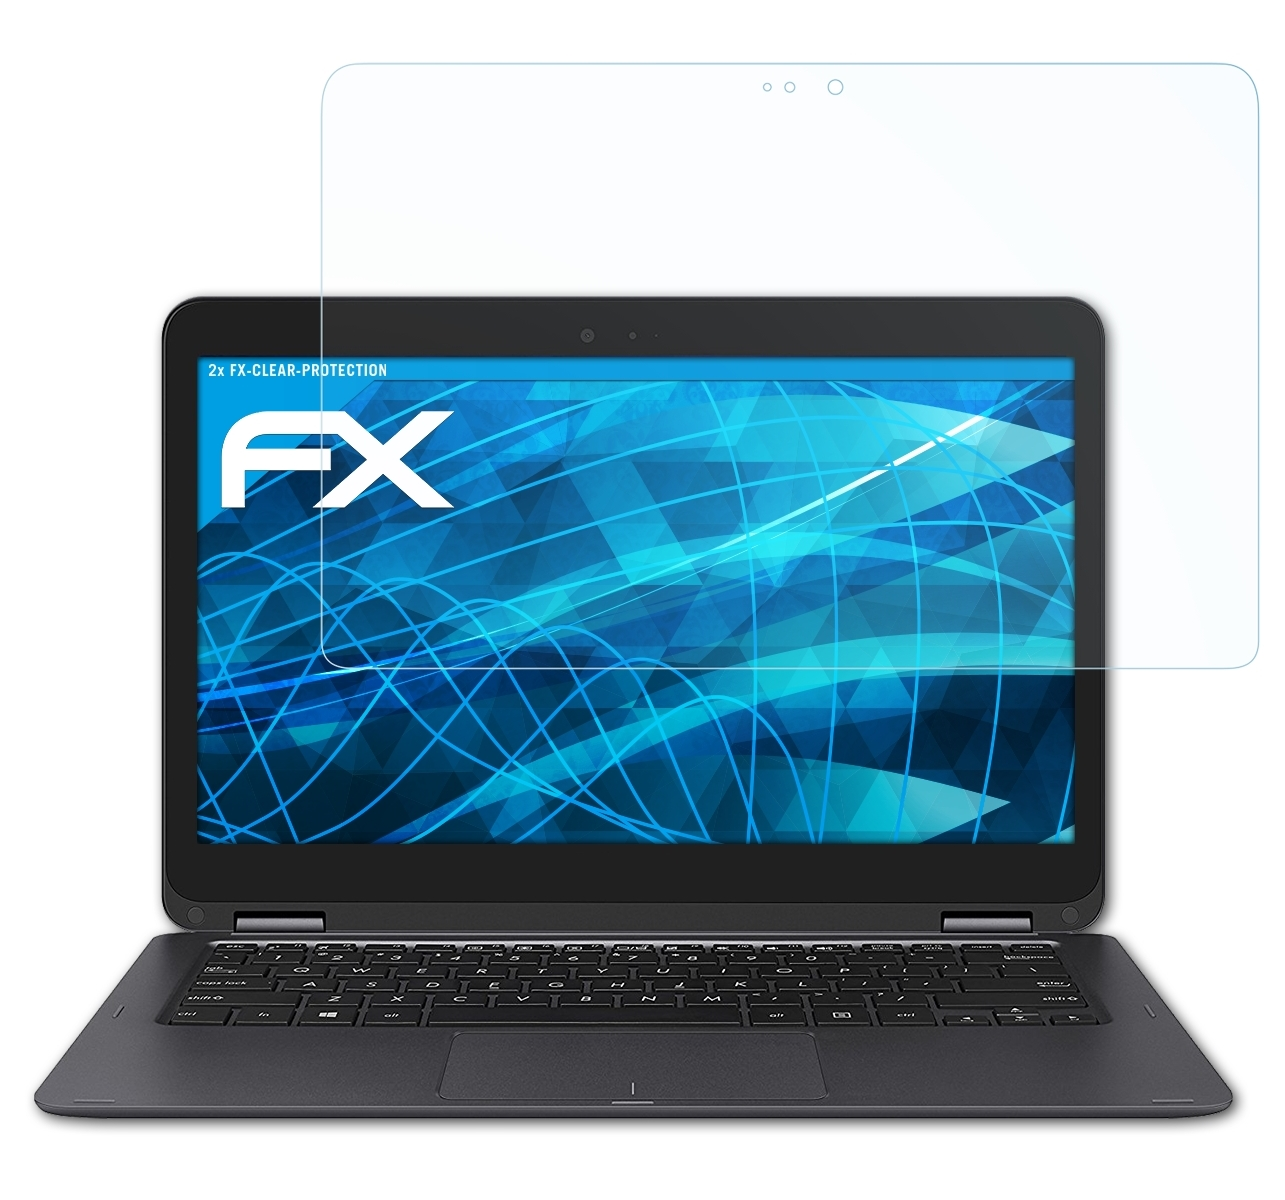 ATFOLIX Displayschutz(für FX-Clear Asus ZenBook 2x (UX360UA)) Flip